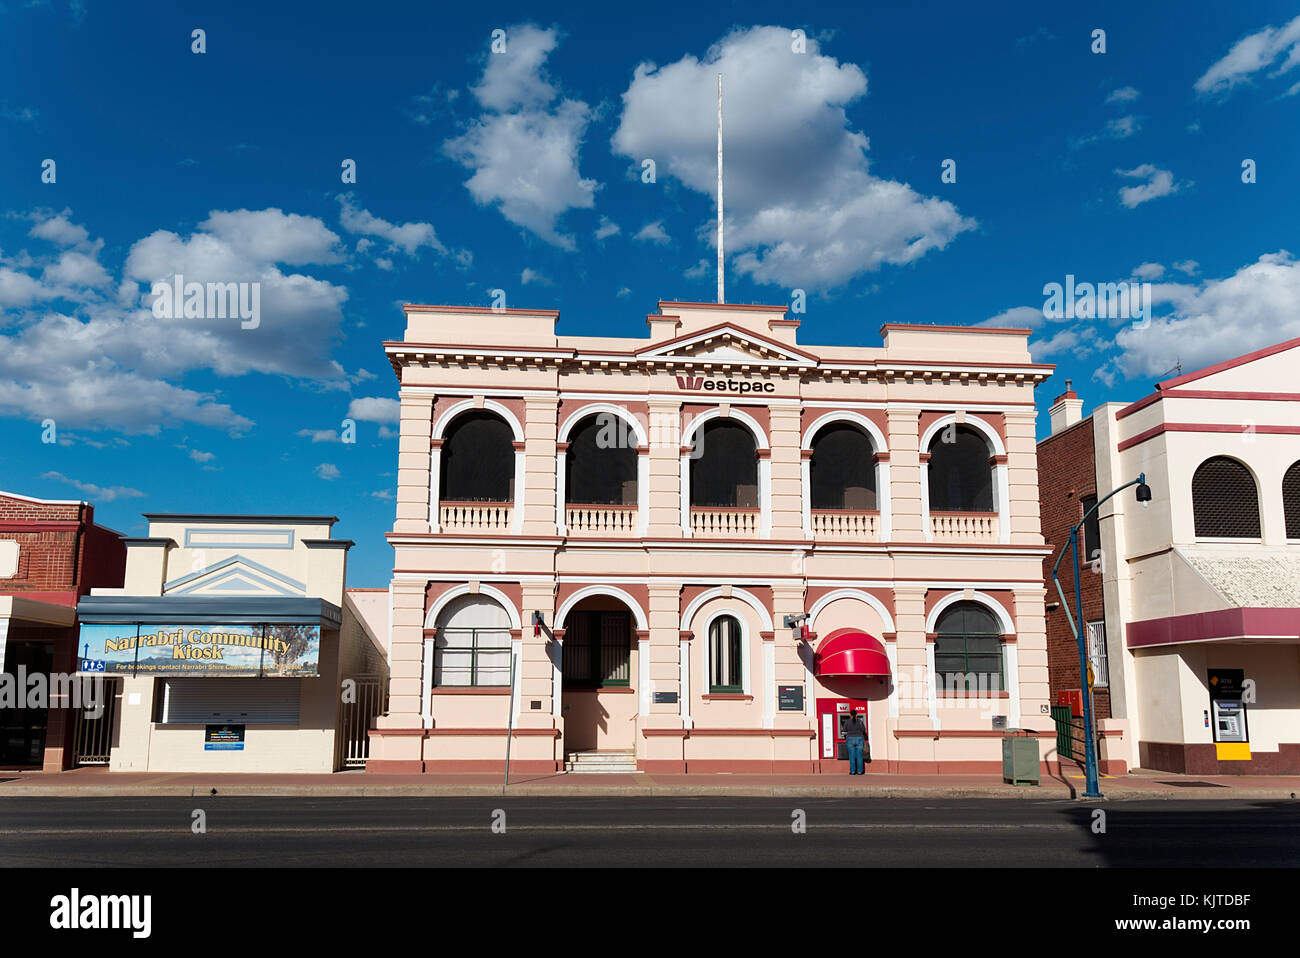 The imposing and historical Westpac bank building on Maitland Street Narrabri Australia Stock Photo